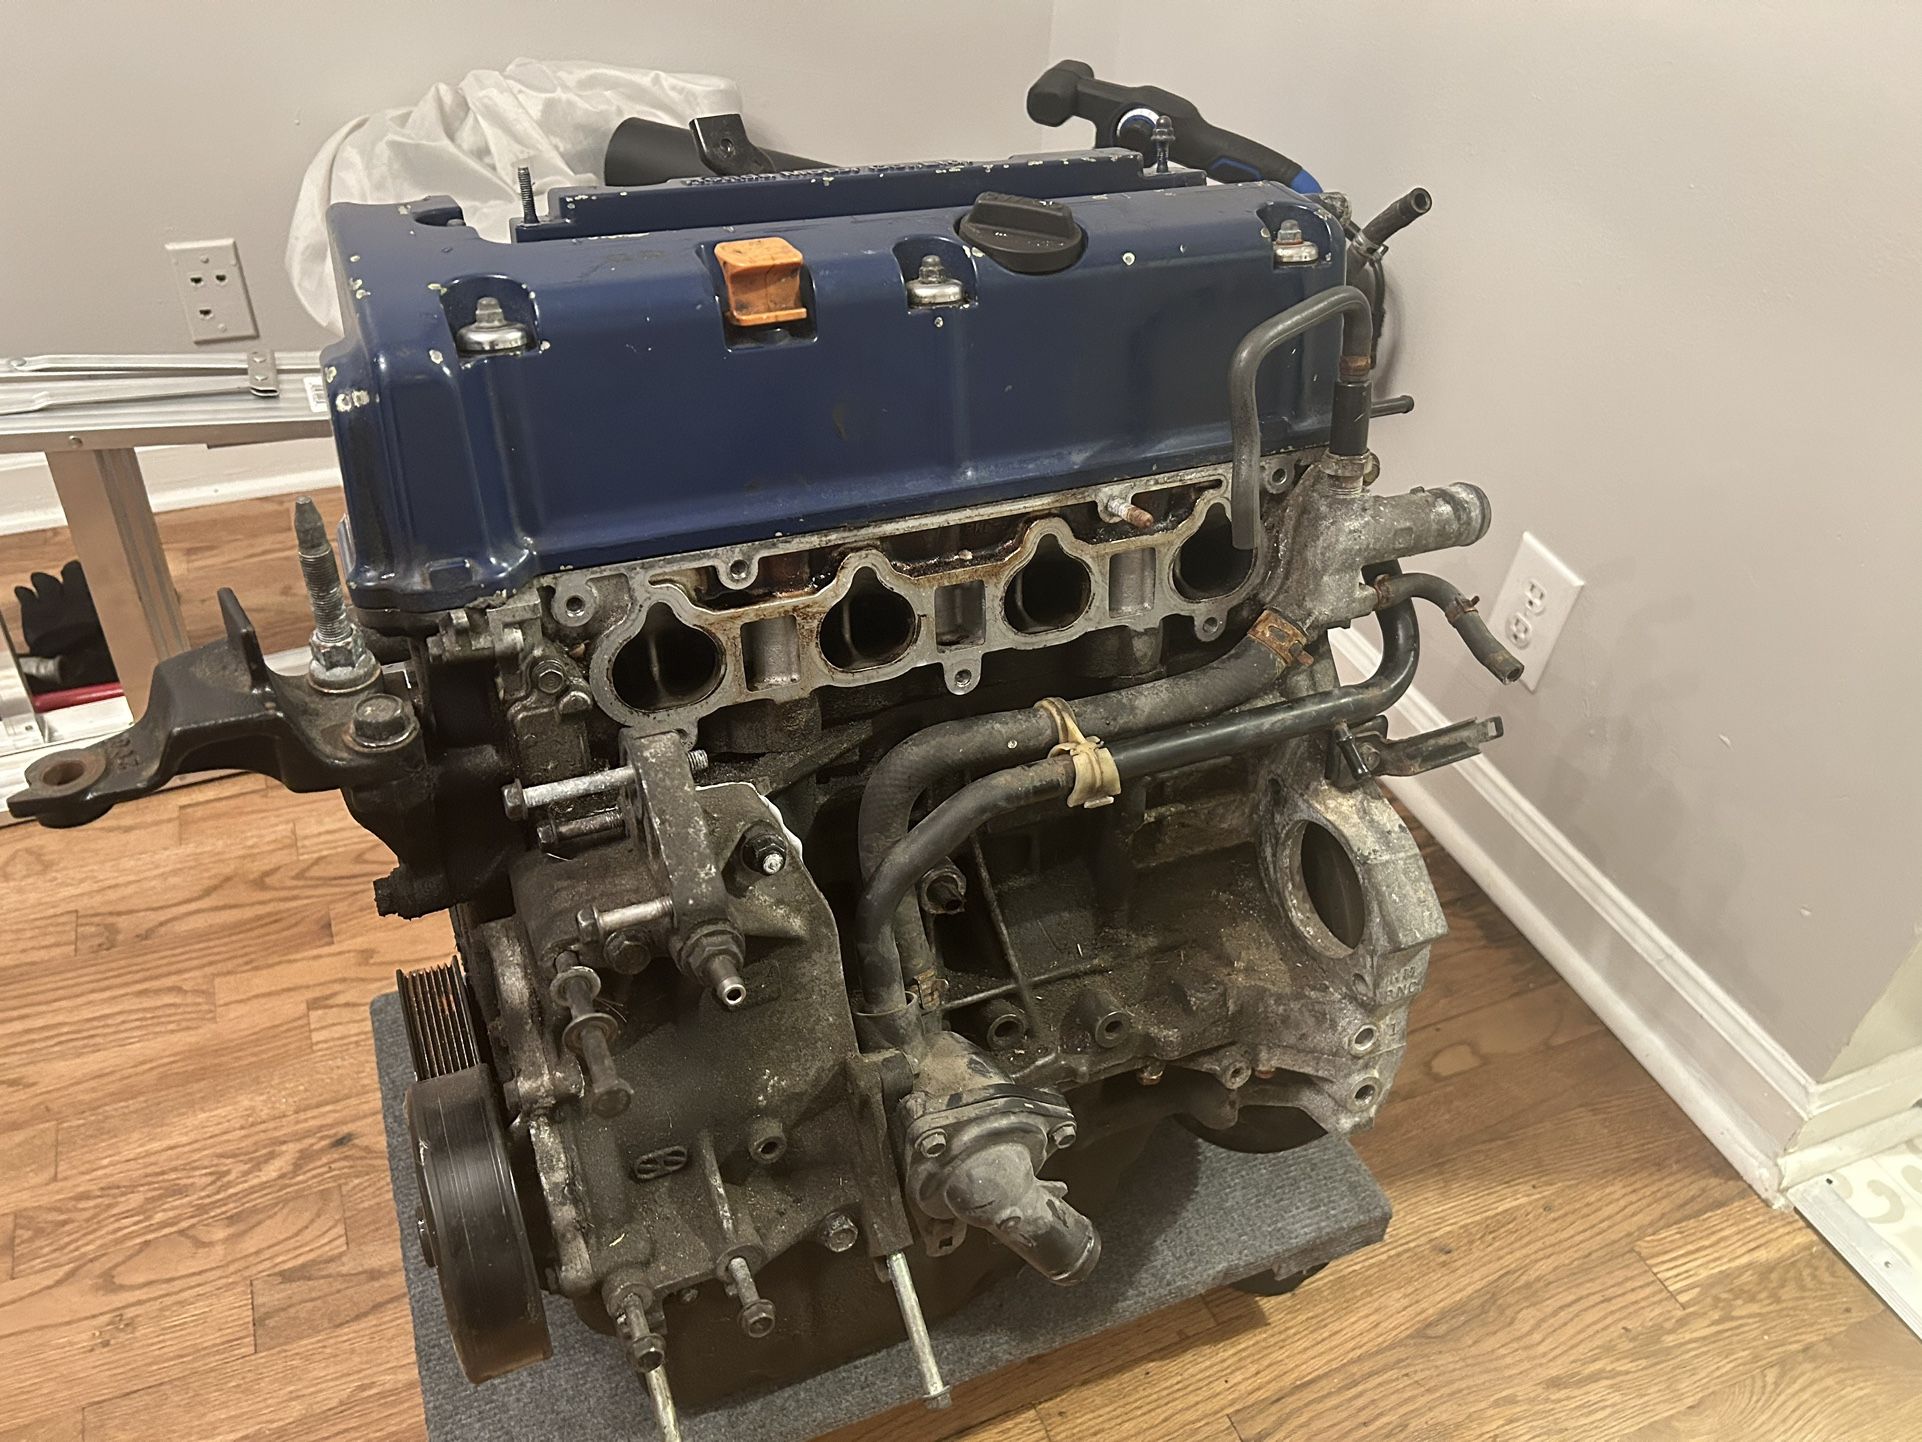 02-06 Acura Rsx Engine K20a3